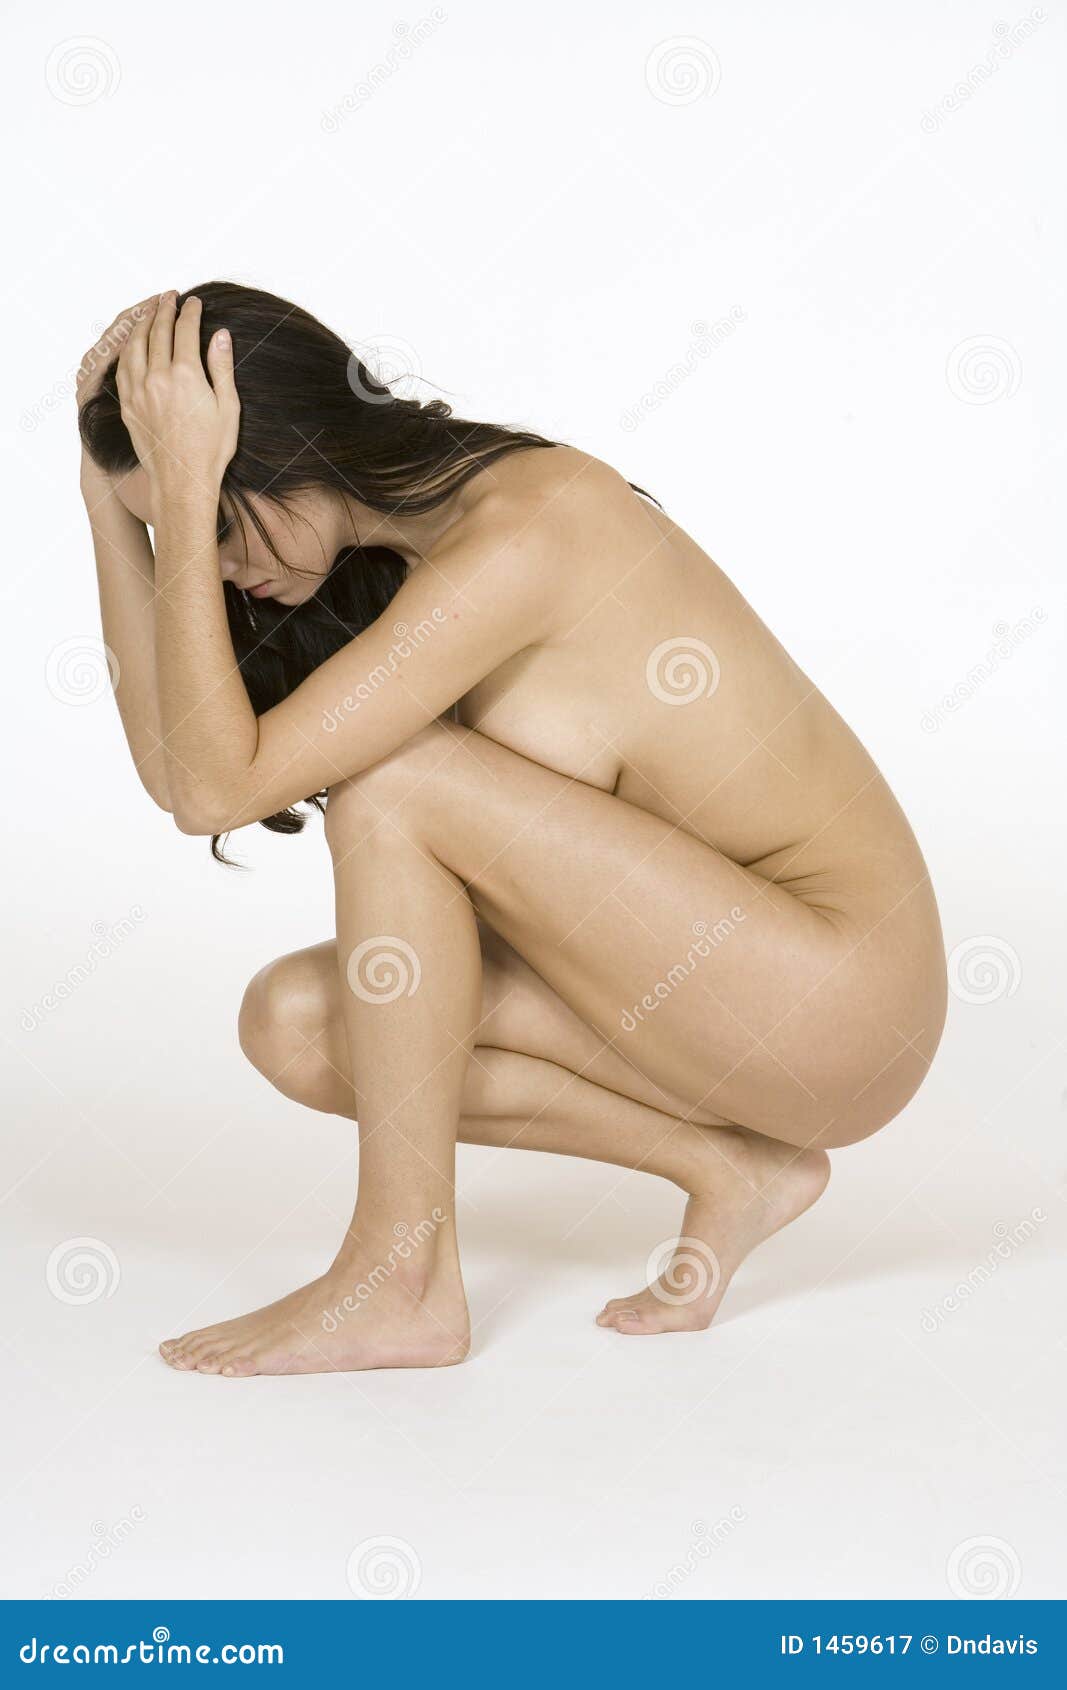 Nude Female Figure Study 24